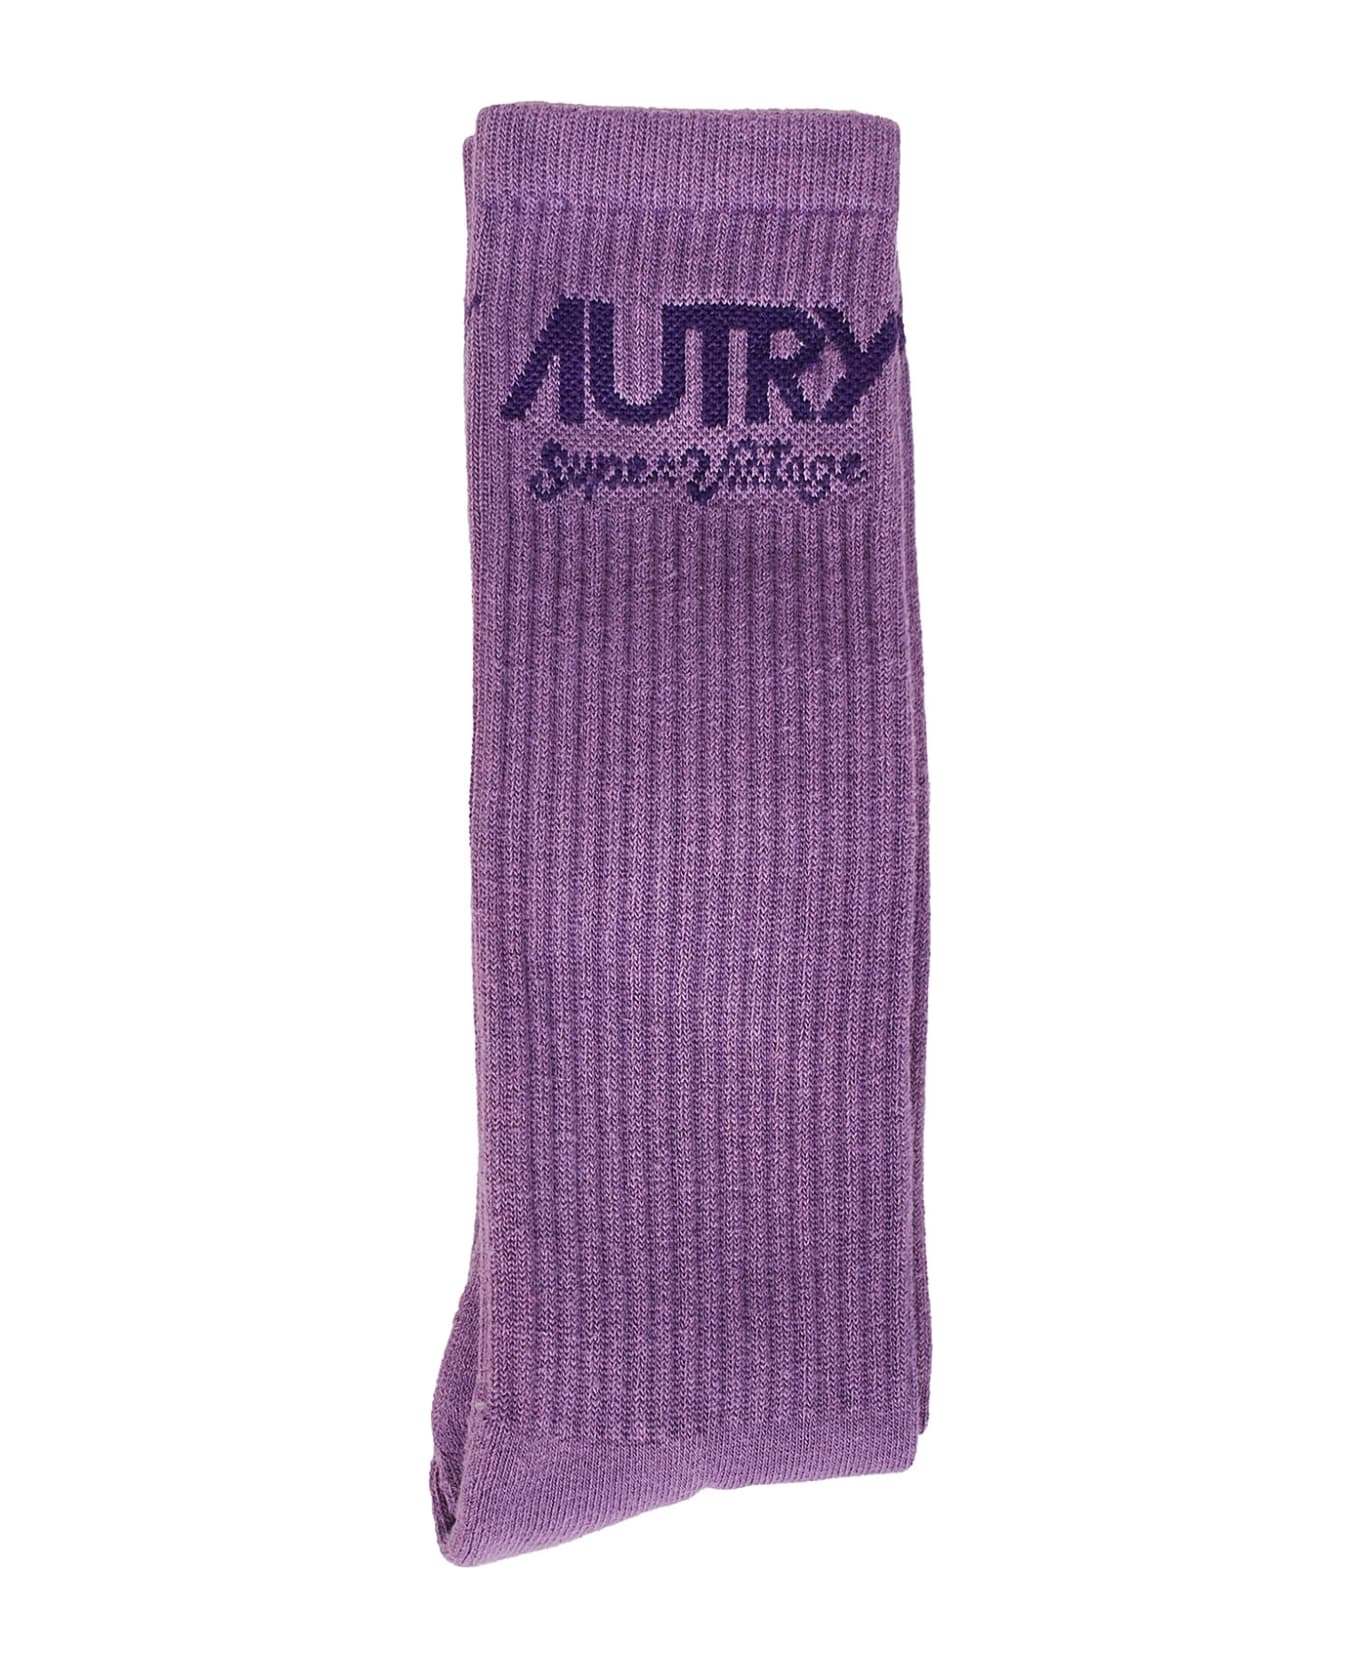 Autry Supervintage Socks - Tinto Lilac